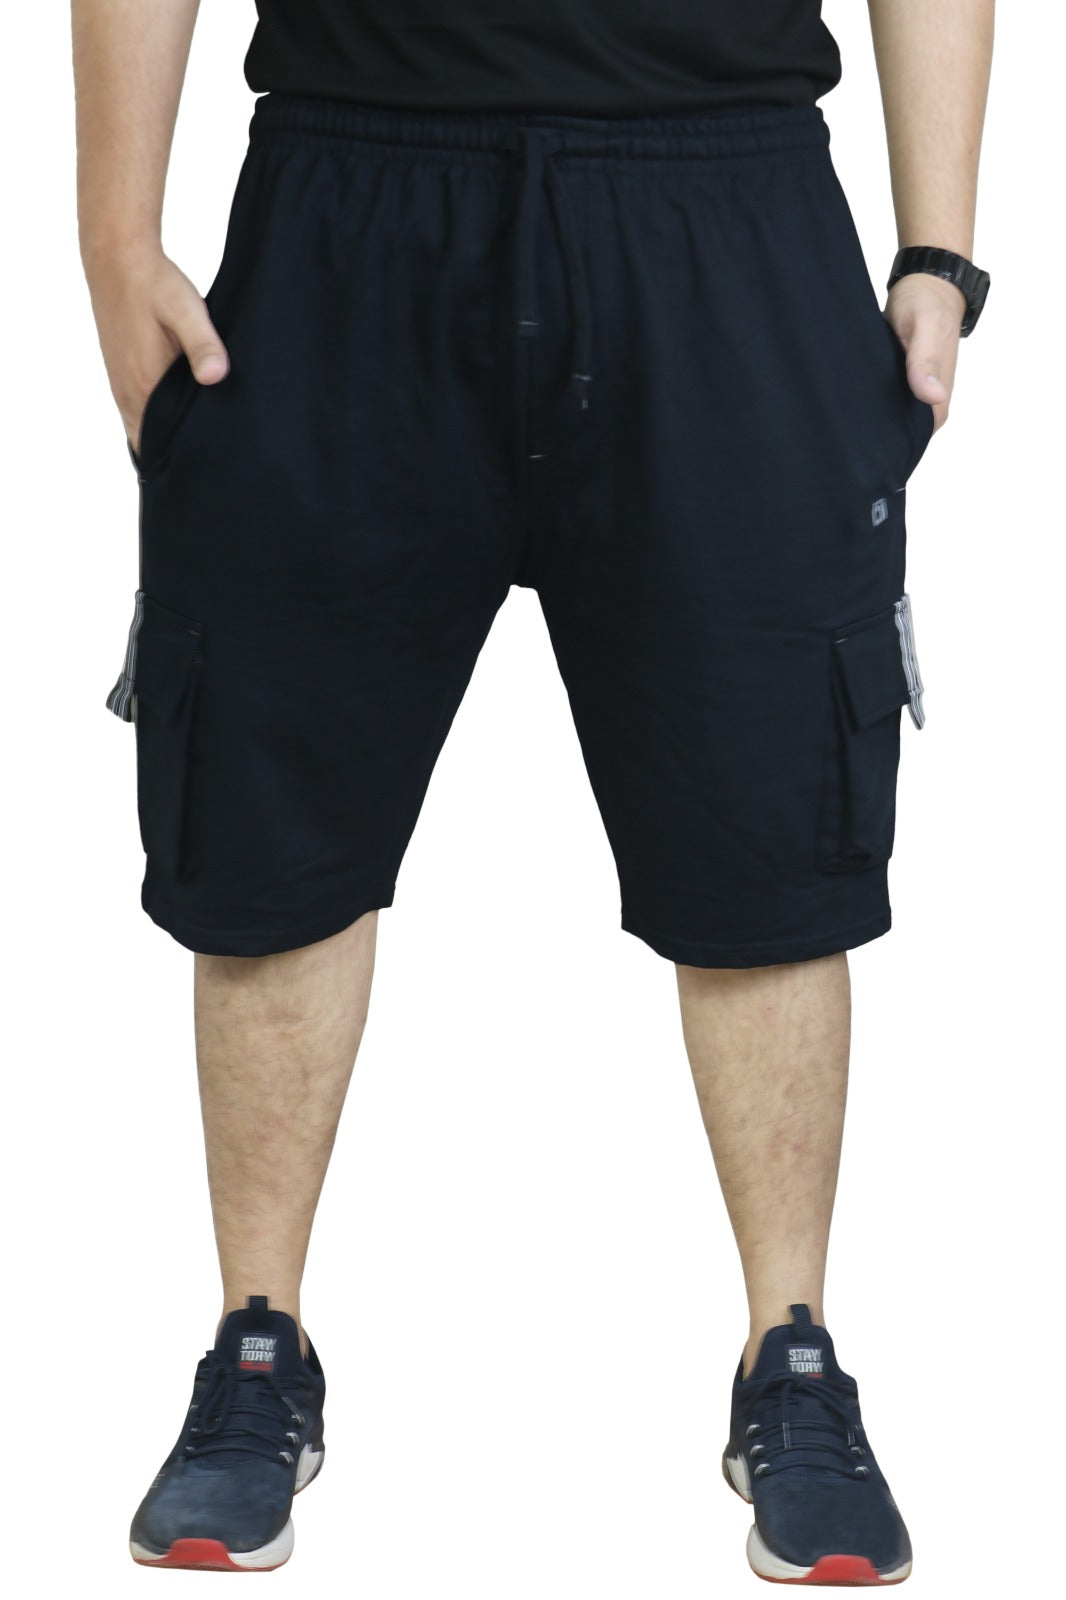 Bahob® Men's Fleece Short, Summer Casual Shorts Cotton with Elasticated Waistband Jogger Shorts S-XXL